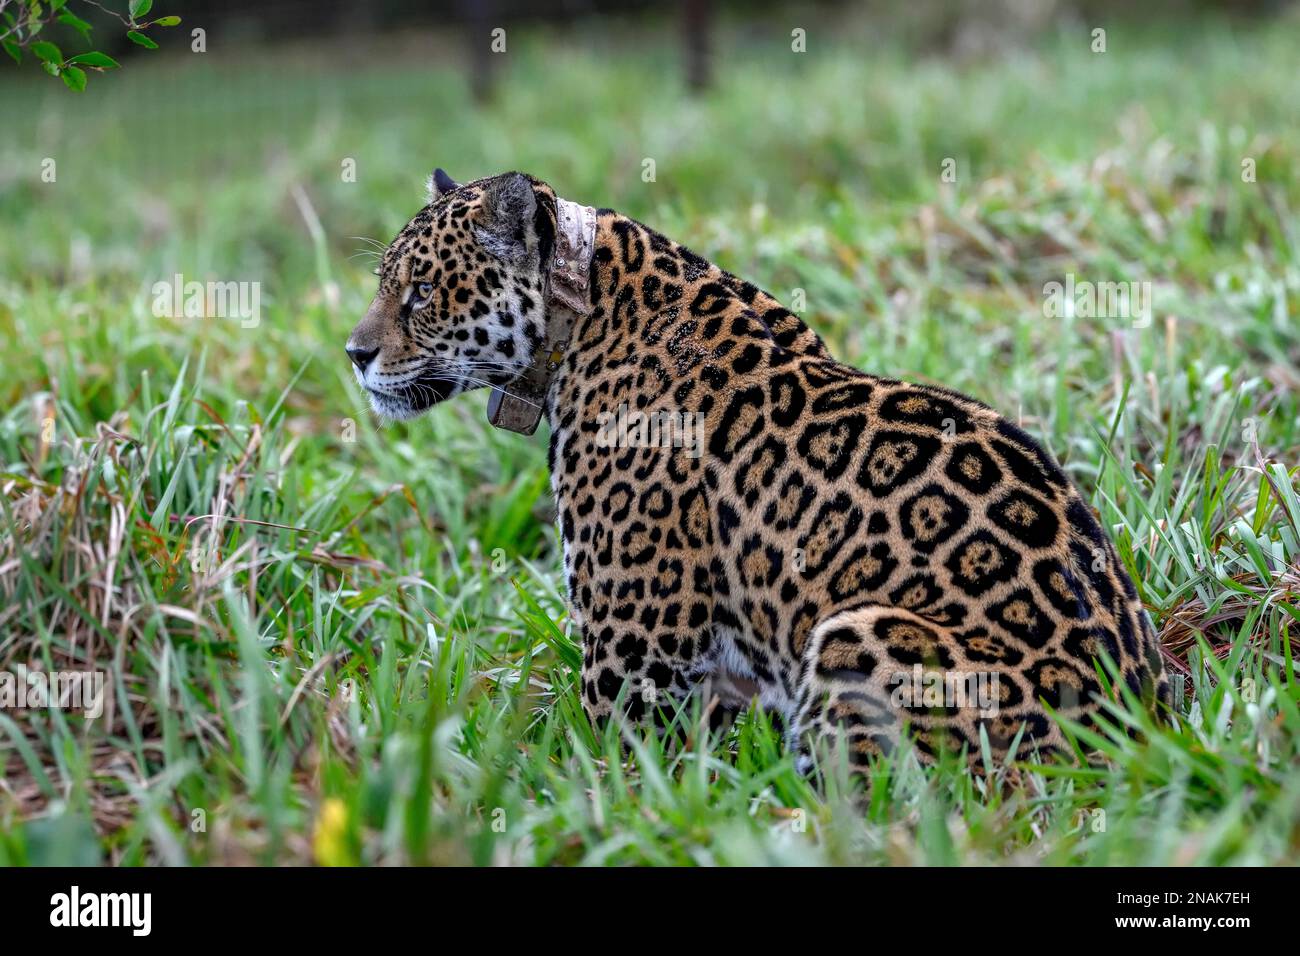 Jaguar (Panthera onca ) mit Funkhalsband im Gras, Gefangener, Zuchtstation des Conservation Land Trust, Ibera Project, Esteros del Stockfoto